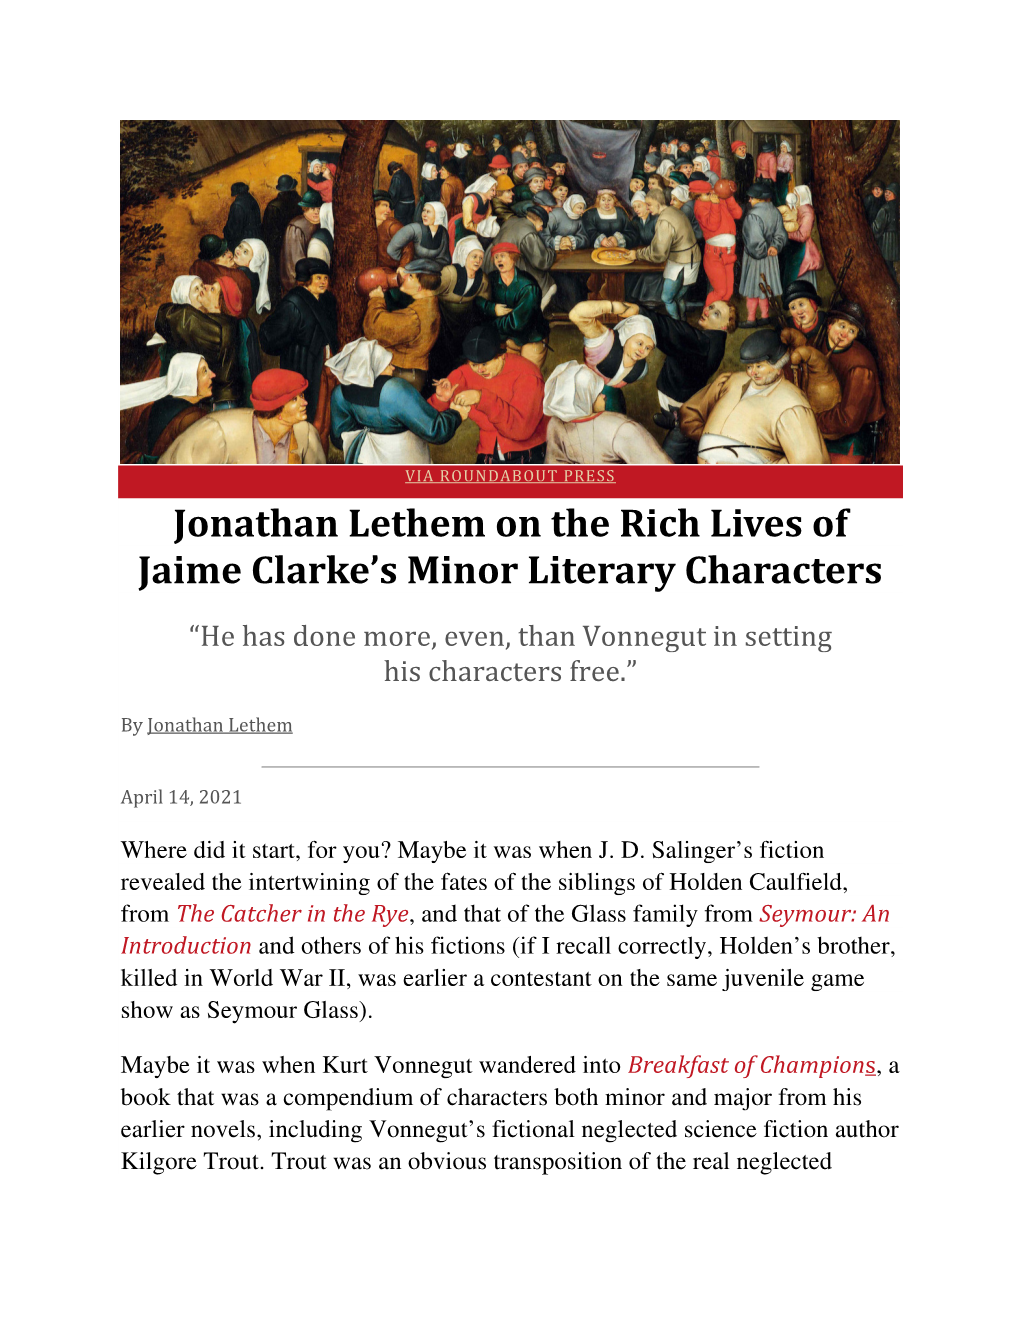 Jonathan Lethem on the Rich Lives of Jaime Clarke's Minor Literary